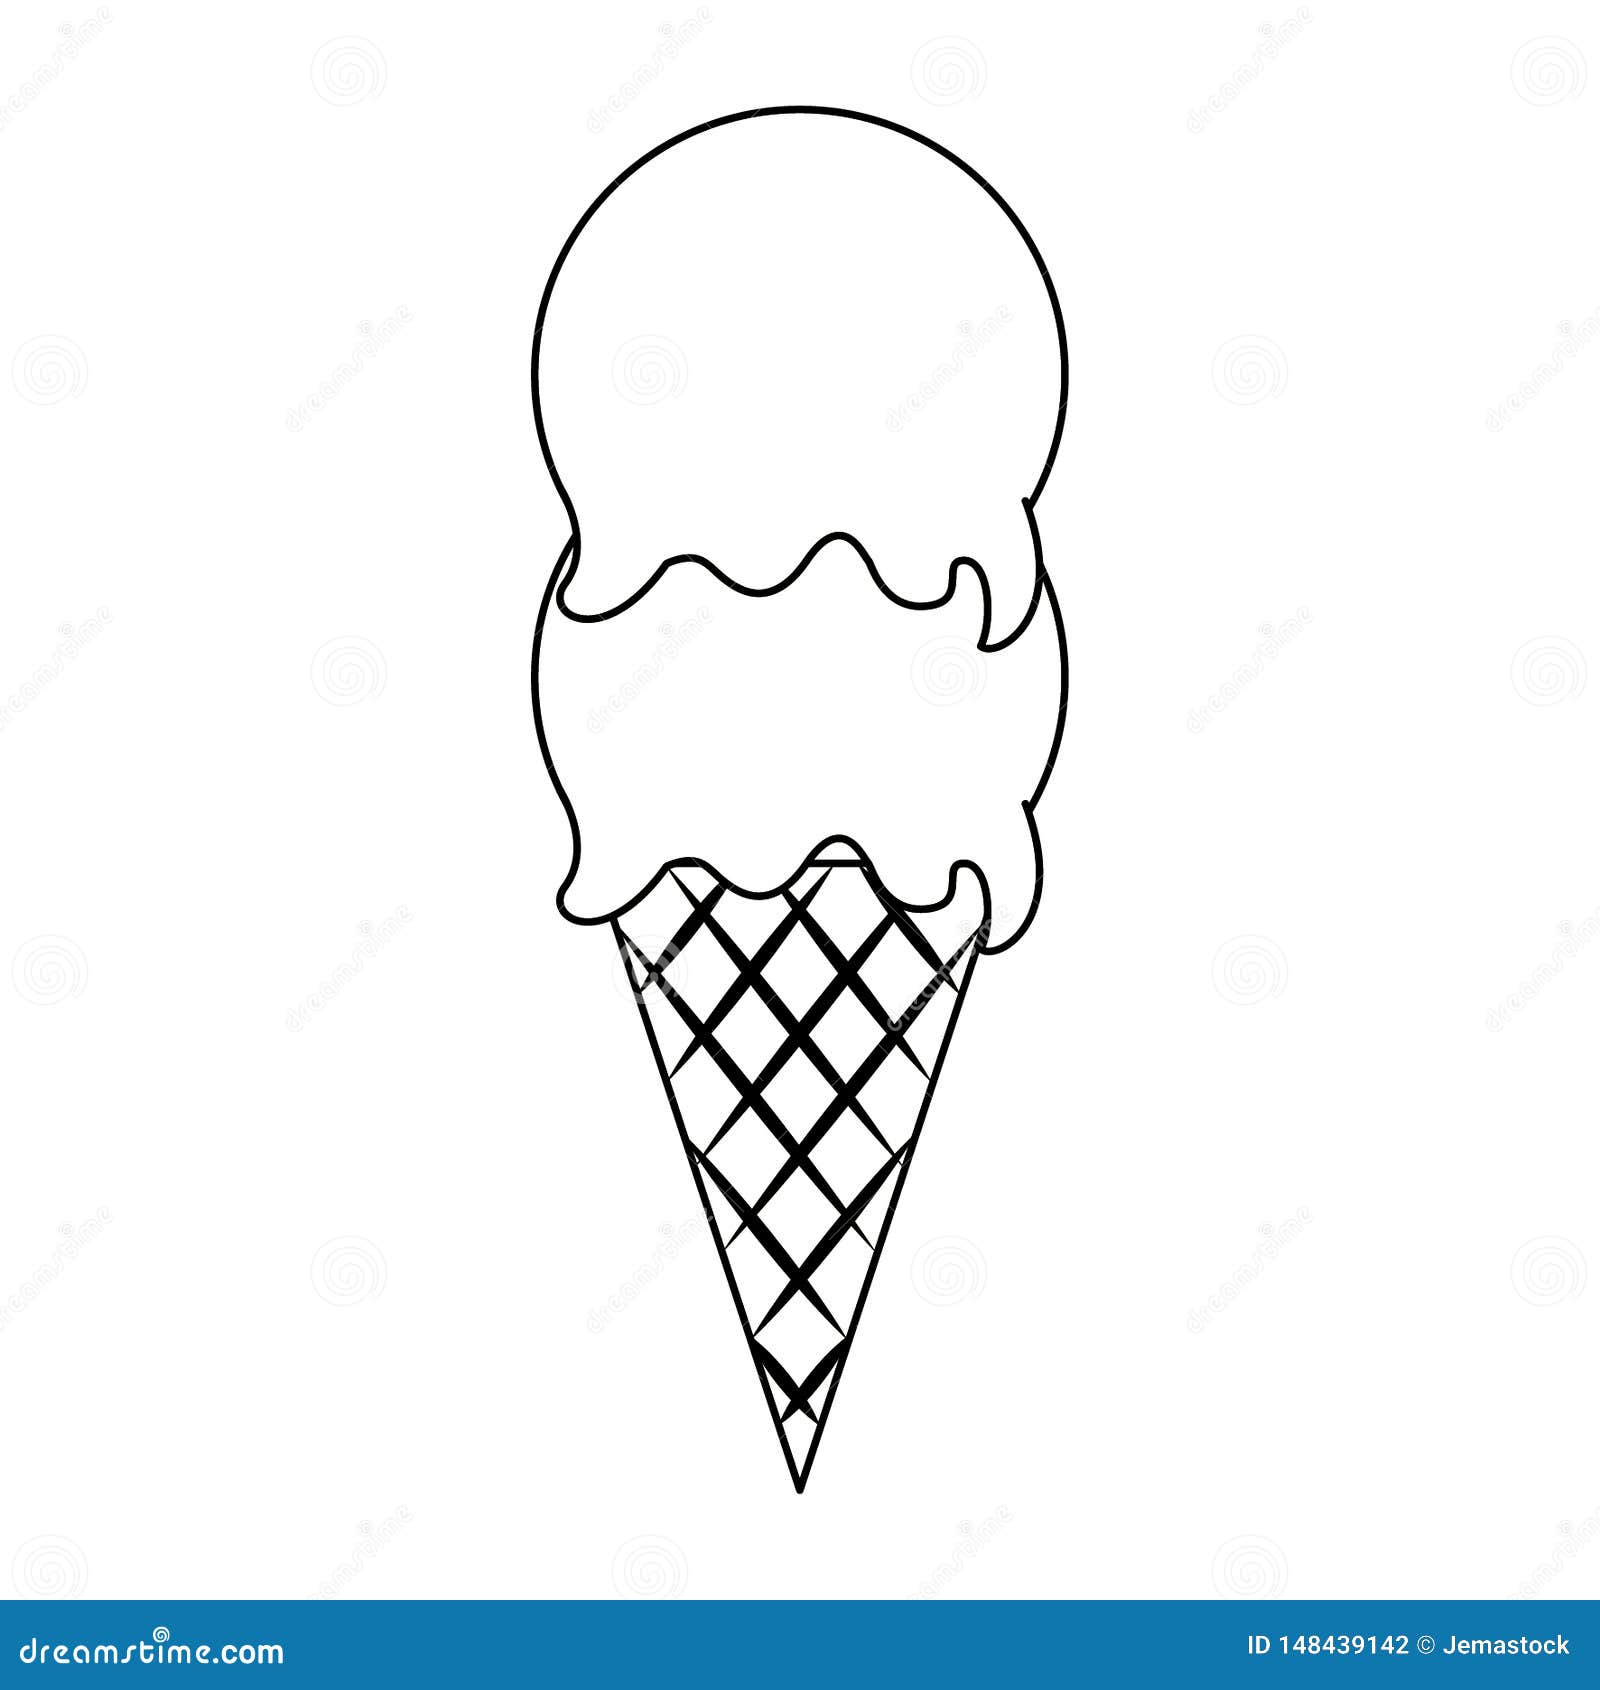 https://thumbs.dreamstime.com/z/ice-cream-cone-two-scoops-black-white-ice-cream-cone-two-scoops-vector-illustration-graphic-design-148439142.jpg